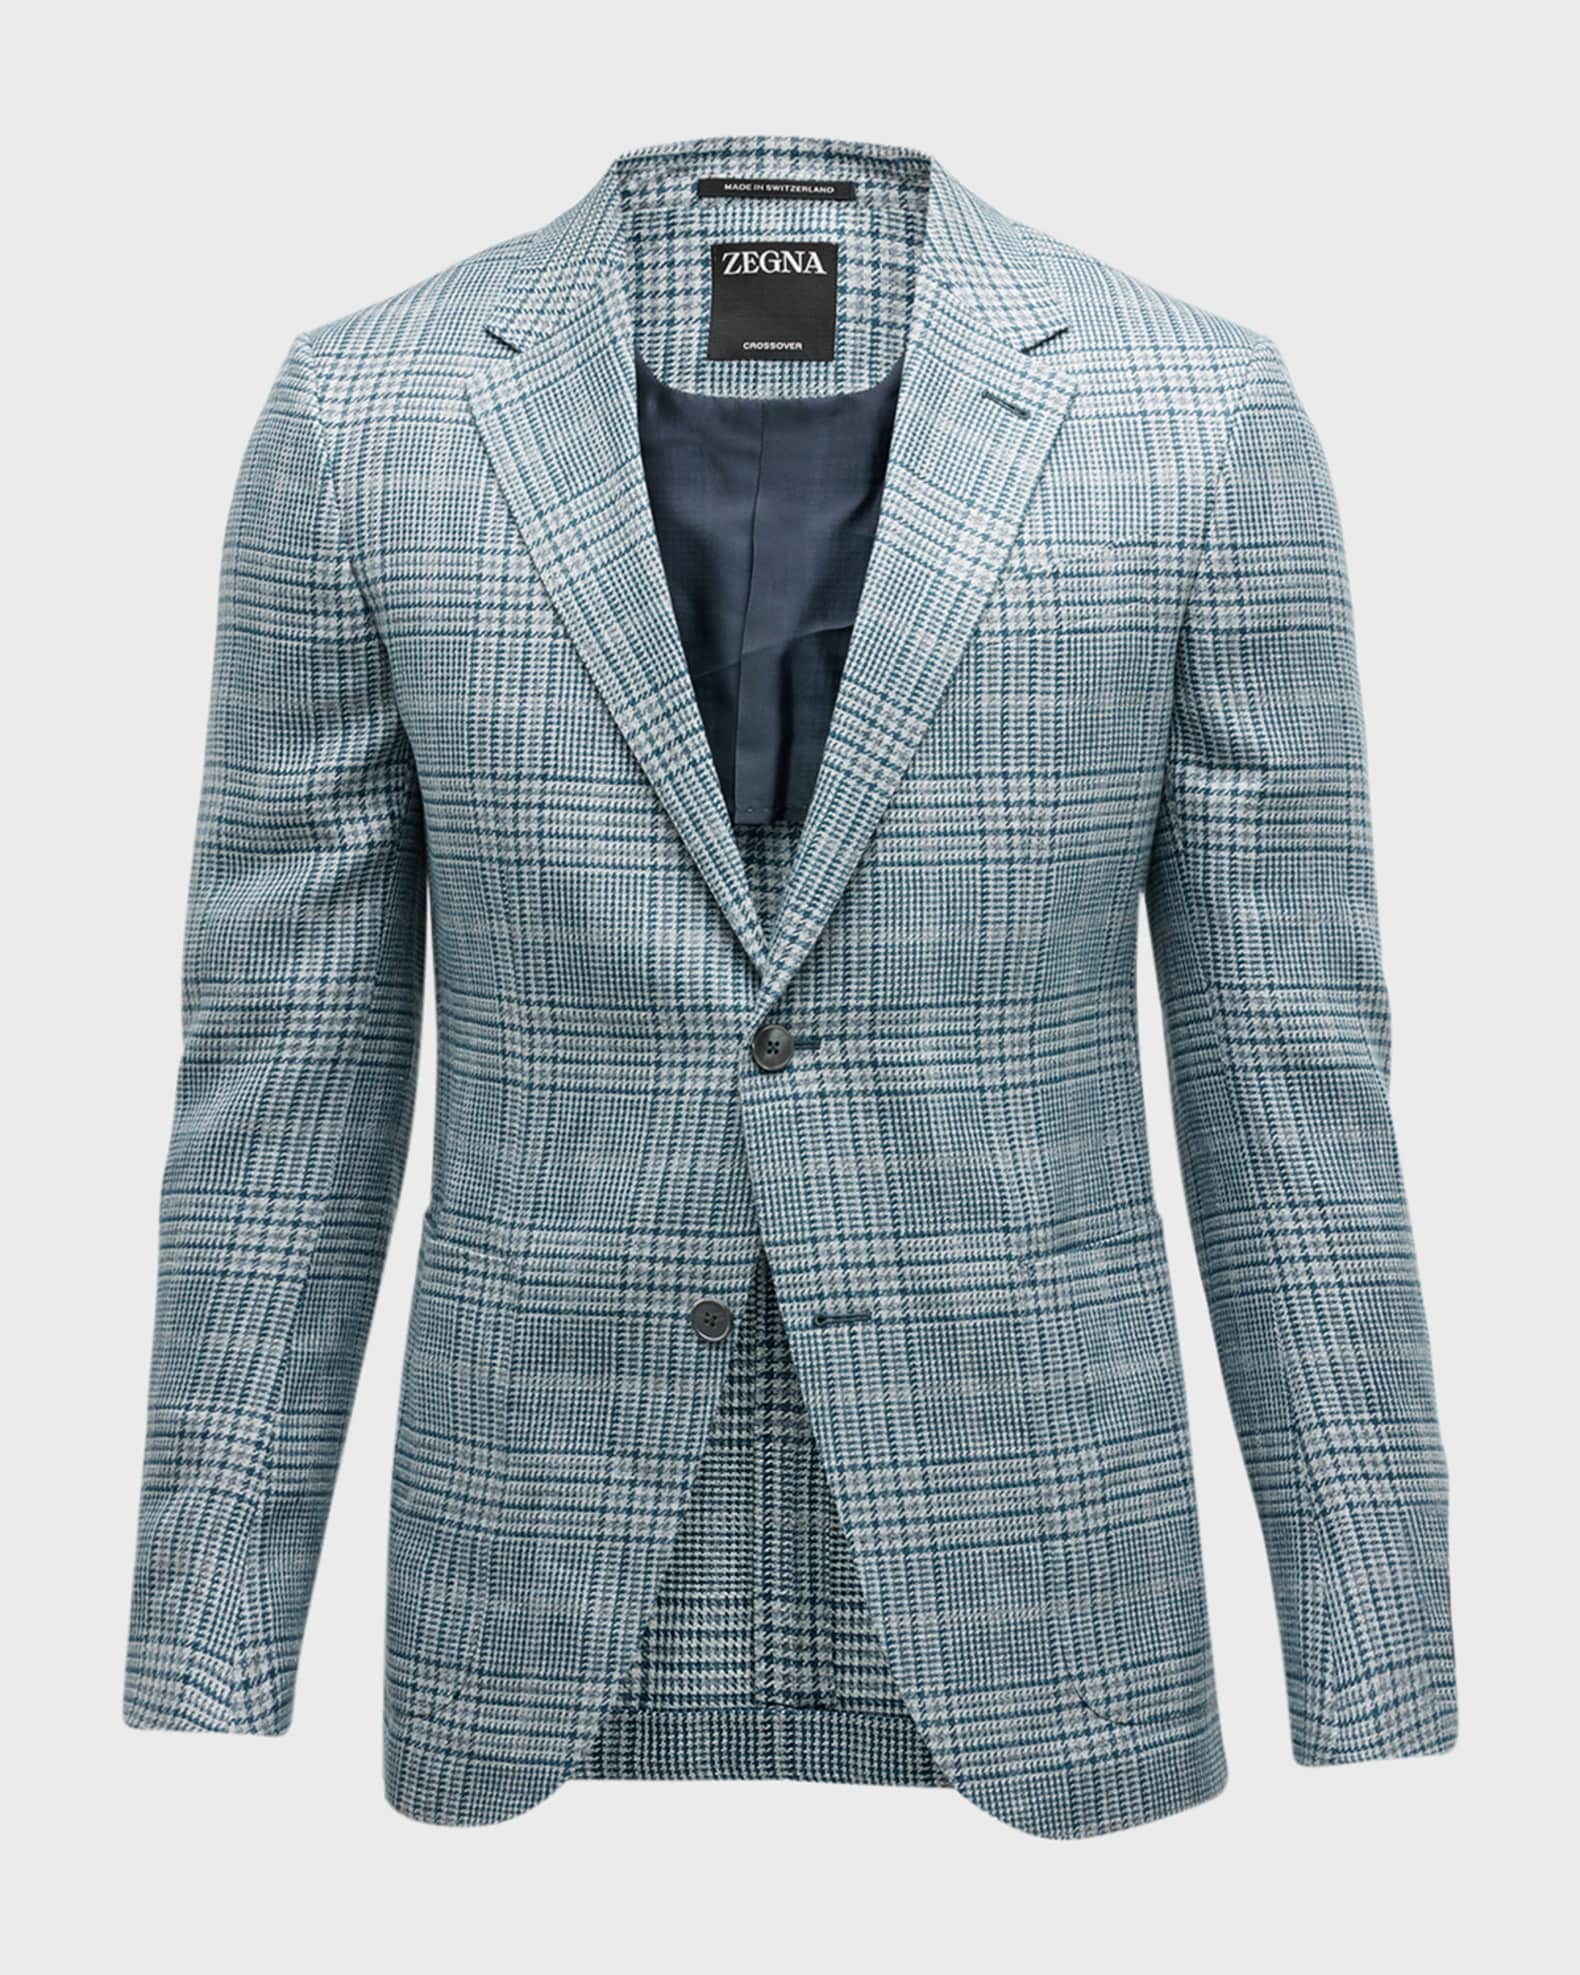 ZEGNA Men's Plaid Linen-Blend Sport Coat | Neiman Marcus